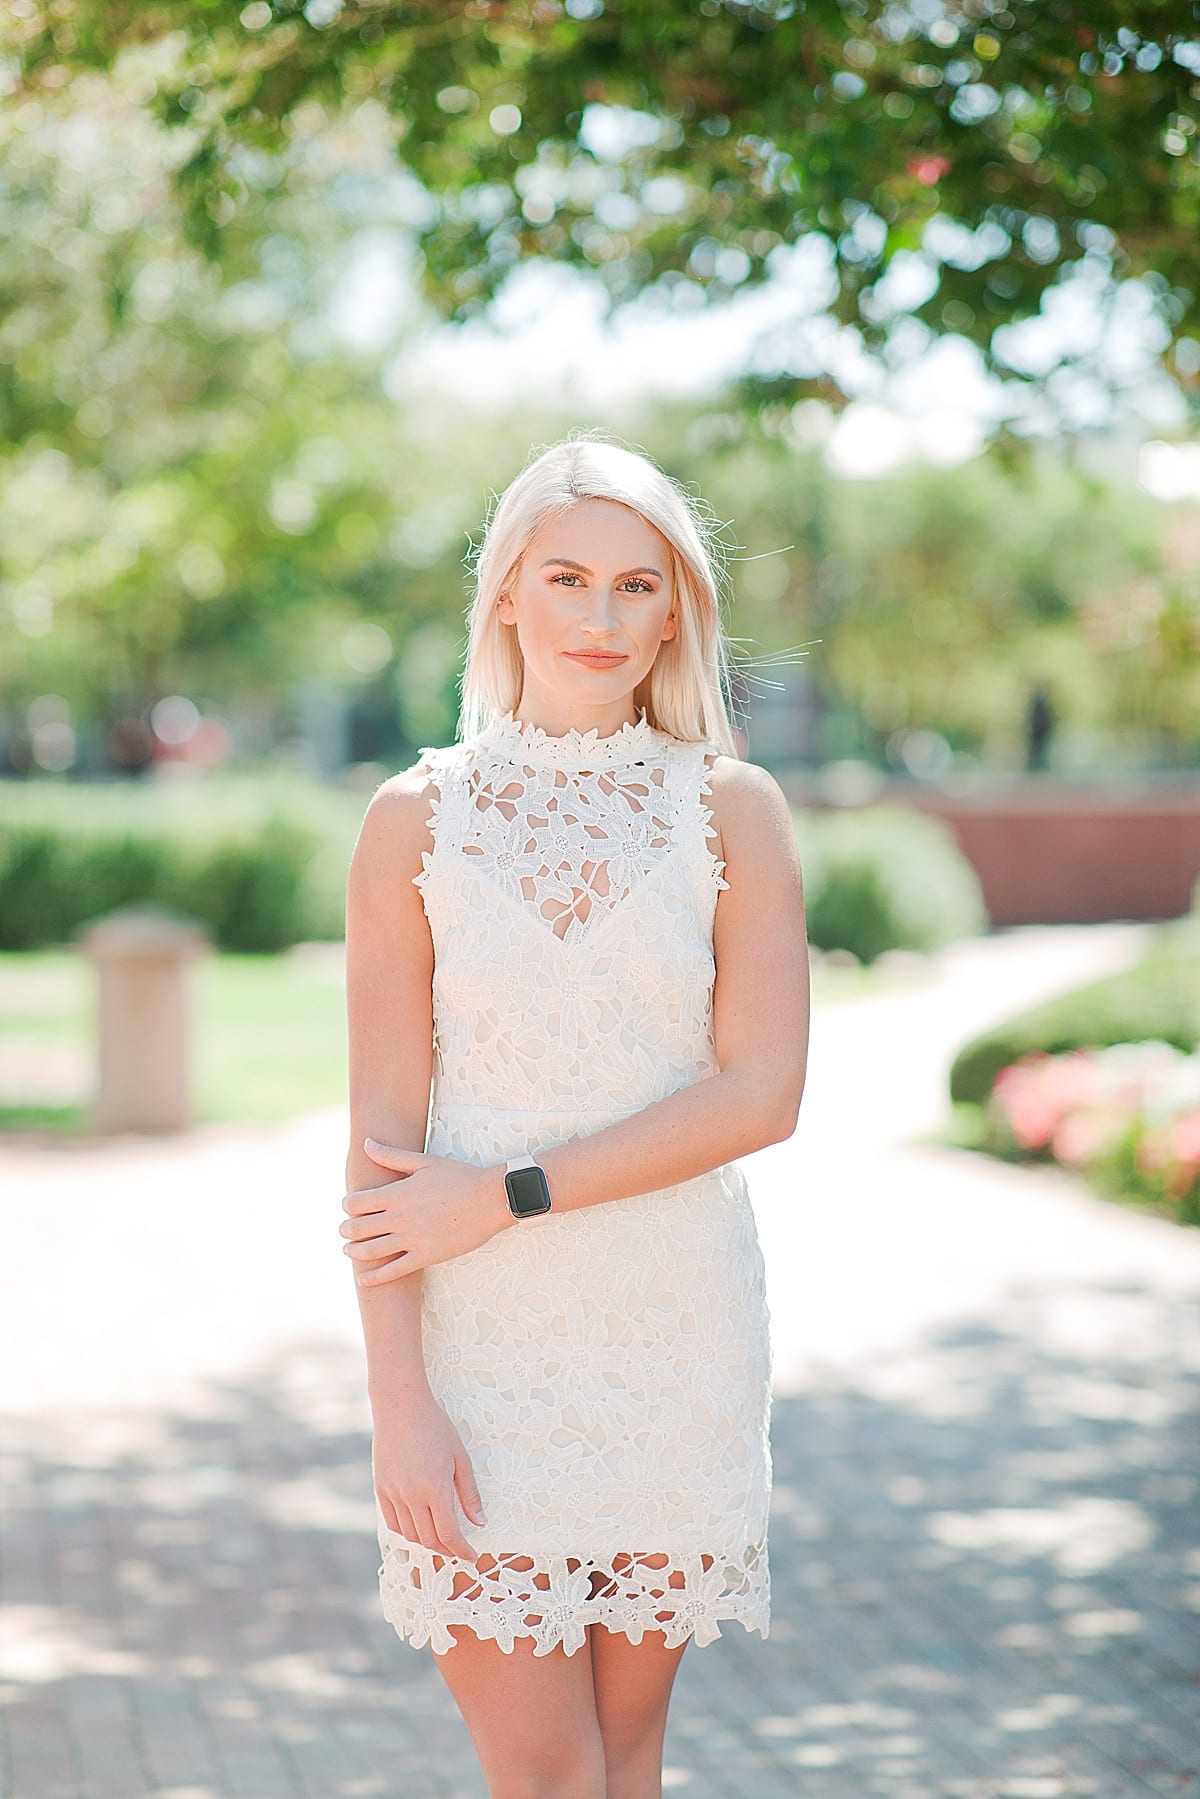 Graduation Photoshoot Girl in White Dress Photo